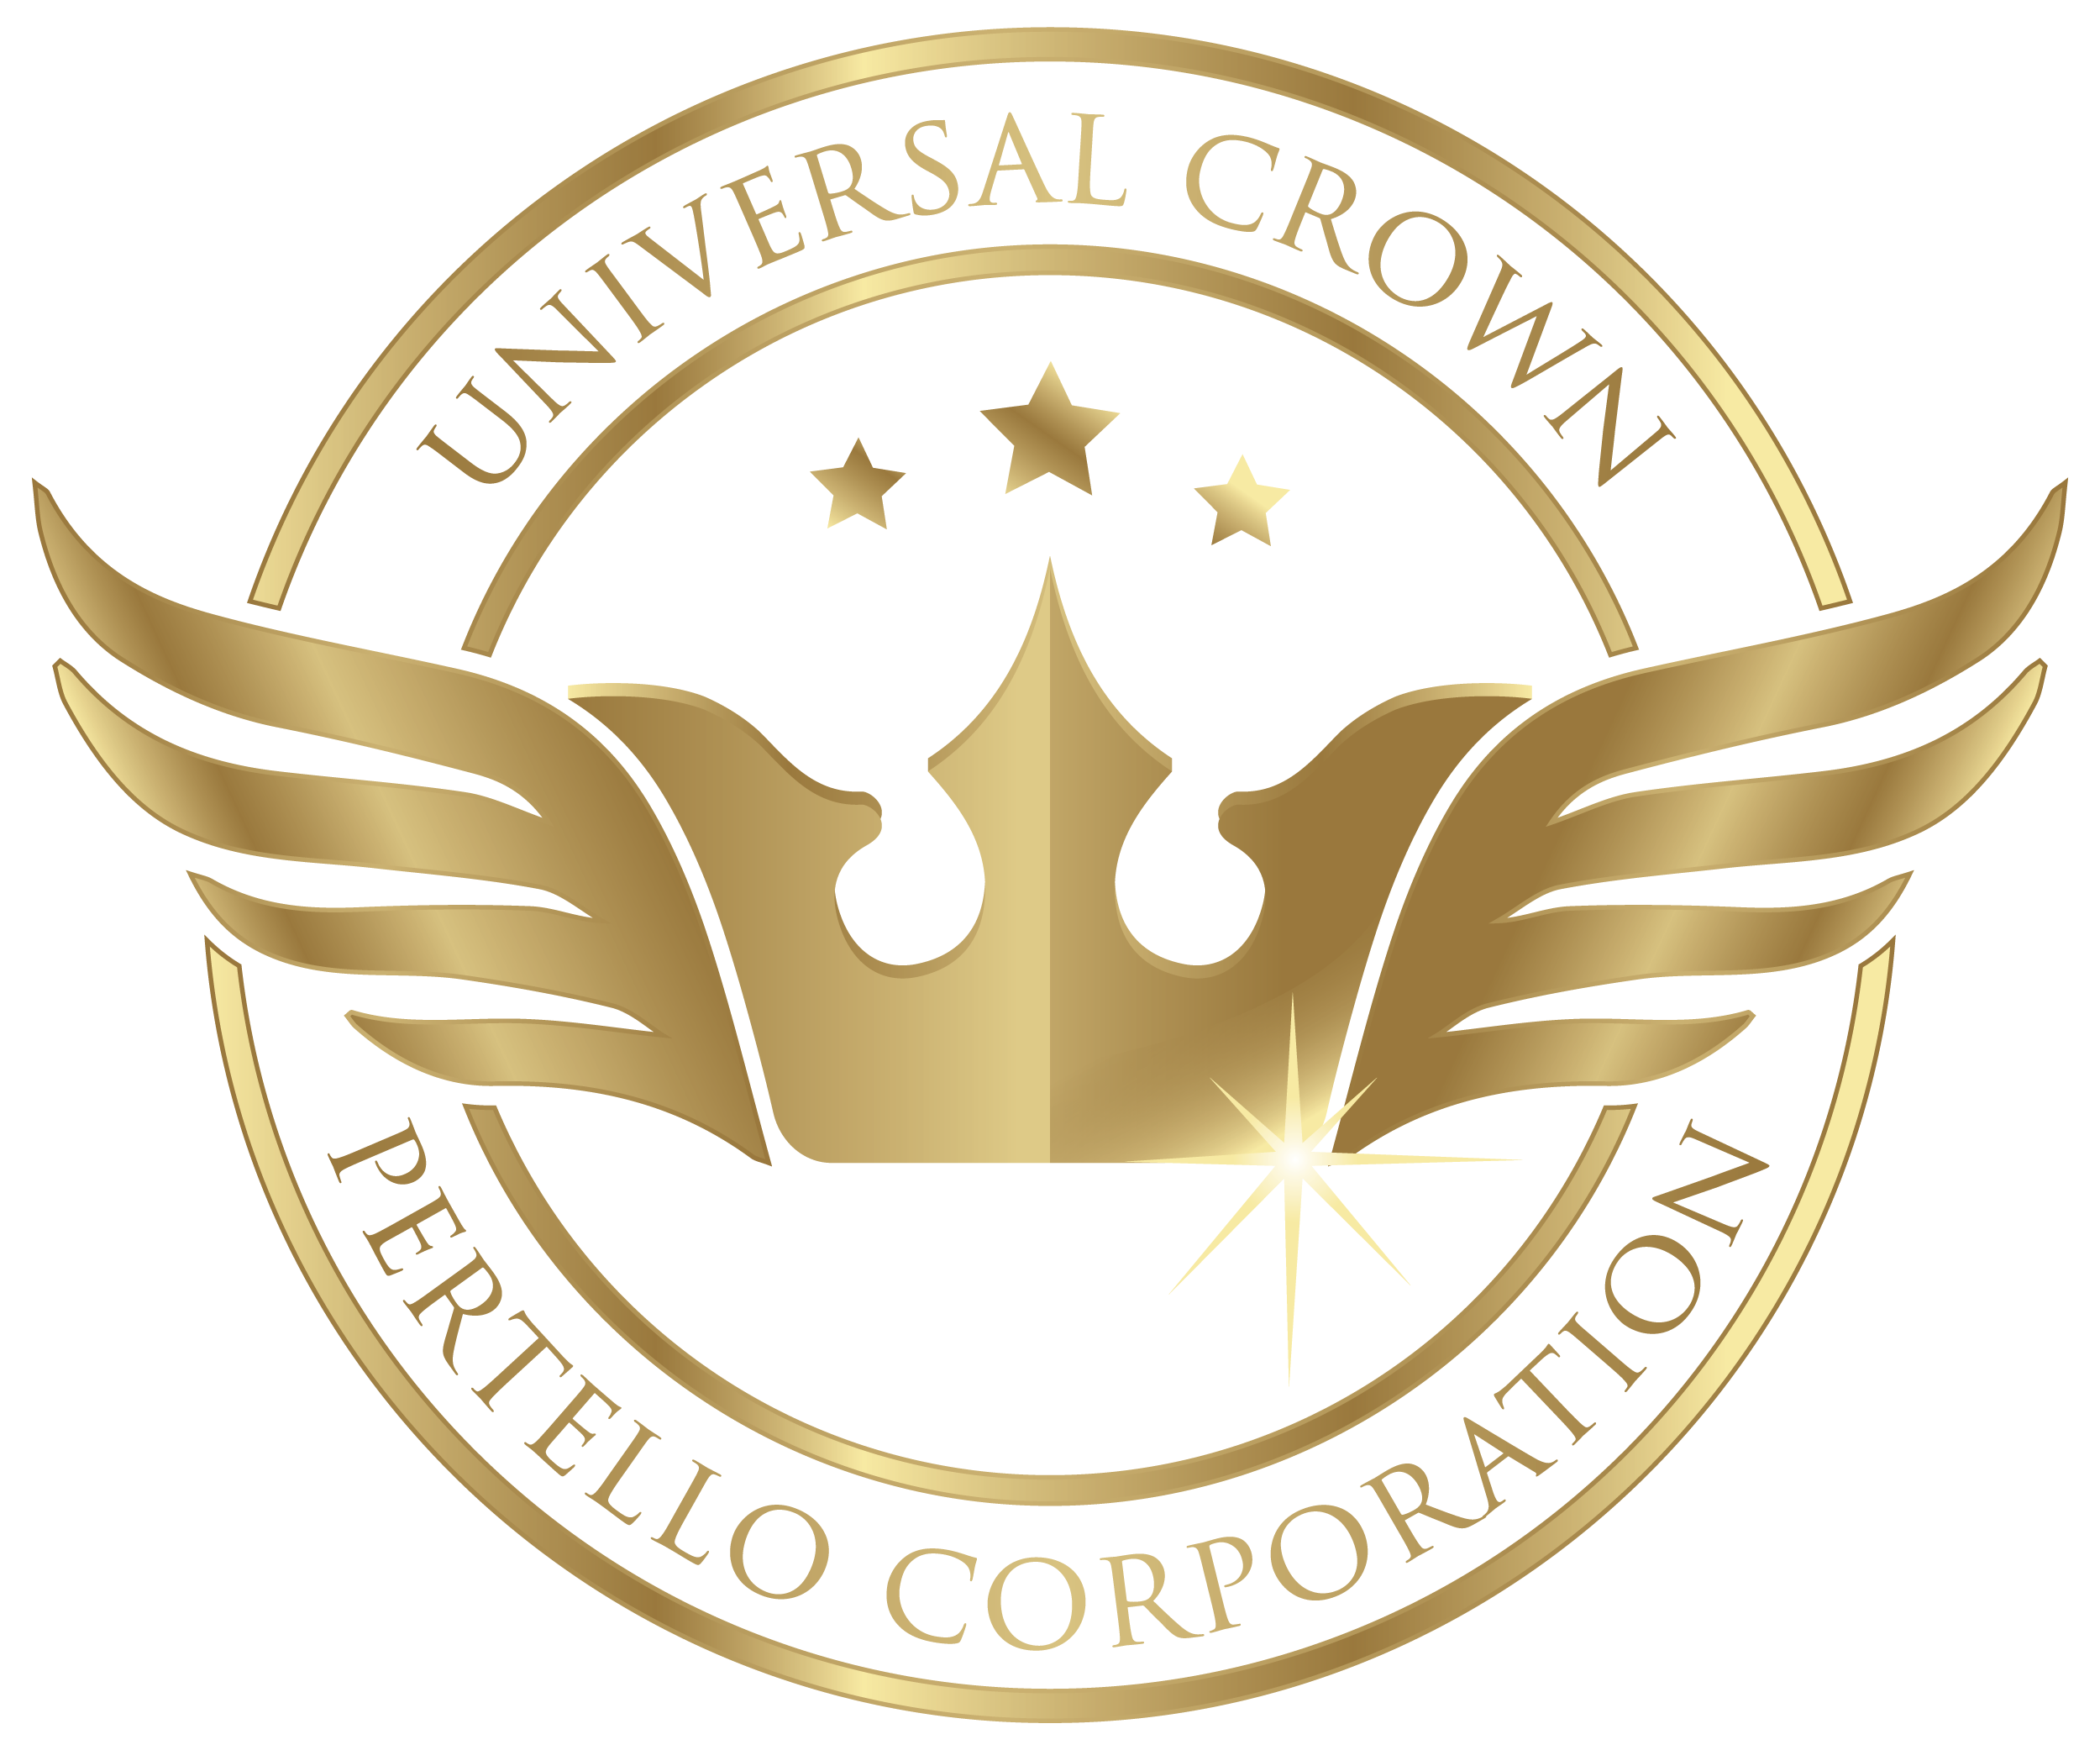 Universal Crown Pertello Corporation